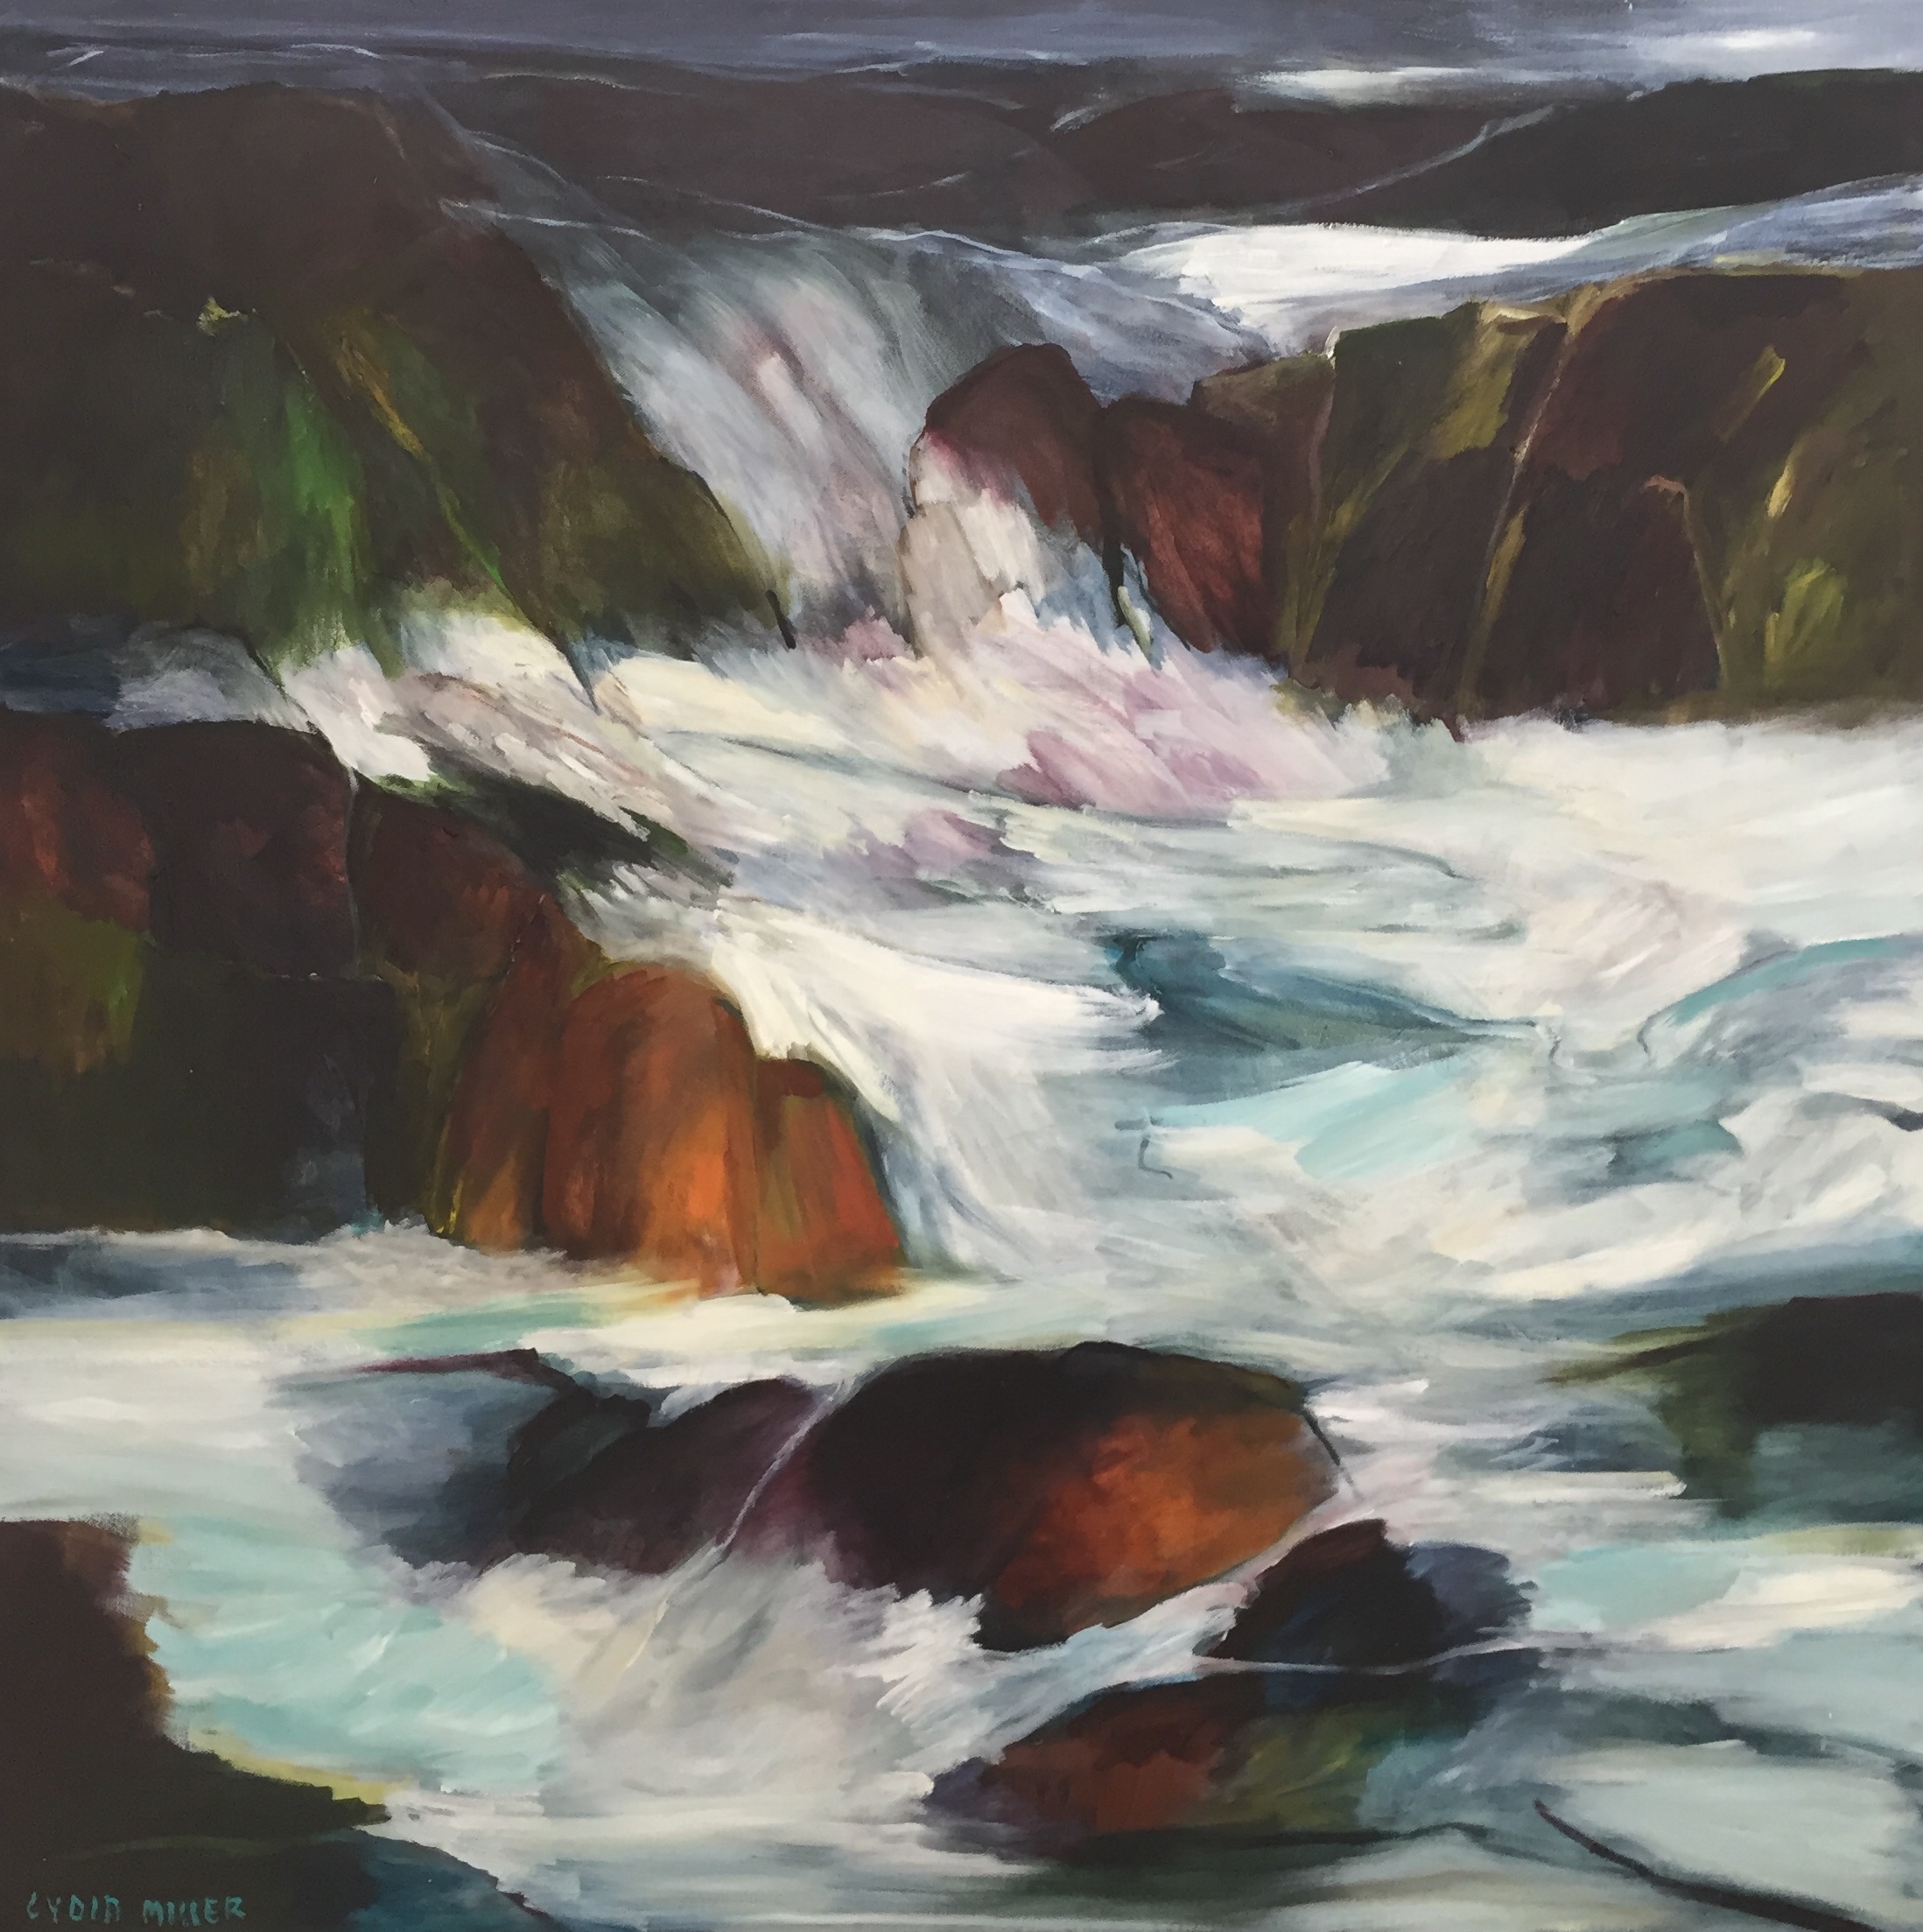 Lydia Miller_Cool Water II_2018_oil on canvas_90 x 90cm_$1500.00.jpg